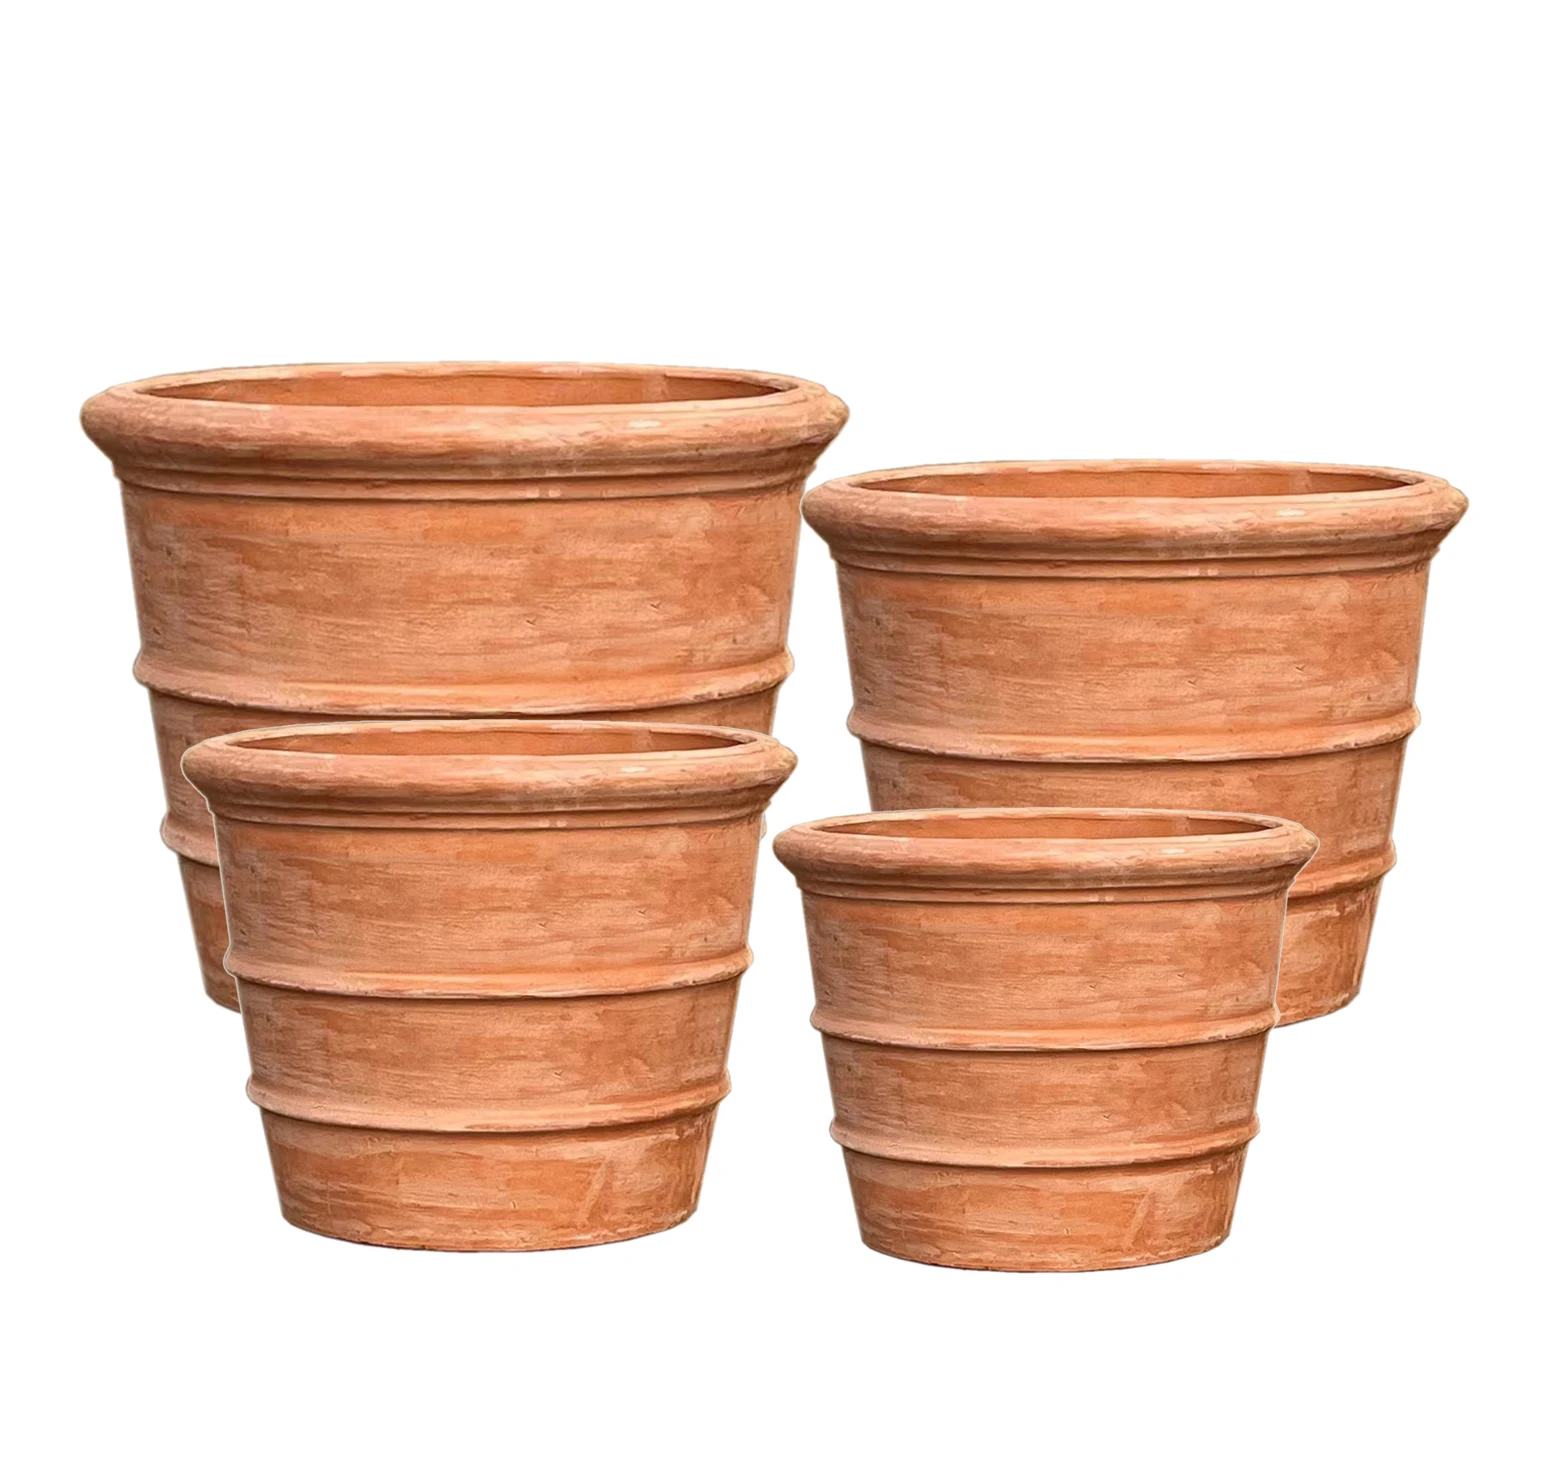 European Style Medium-Sized Terracotta Planter Small Outdoor Garden Home Nursery Floor Room Plant Pot for Restaurants